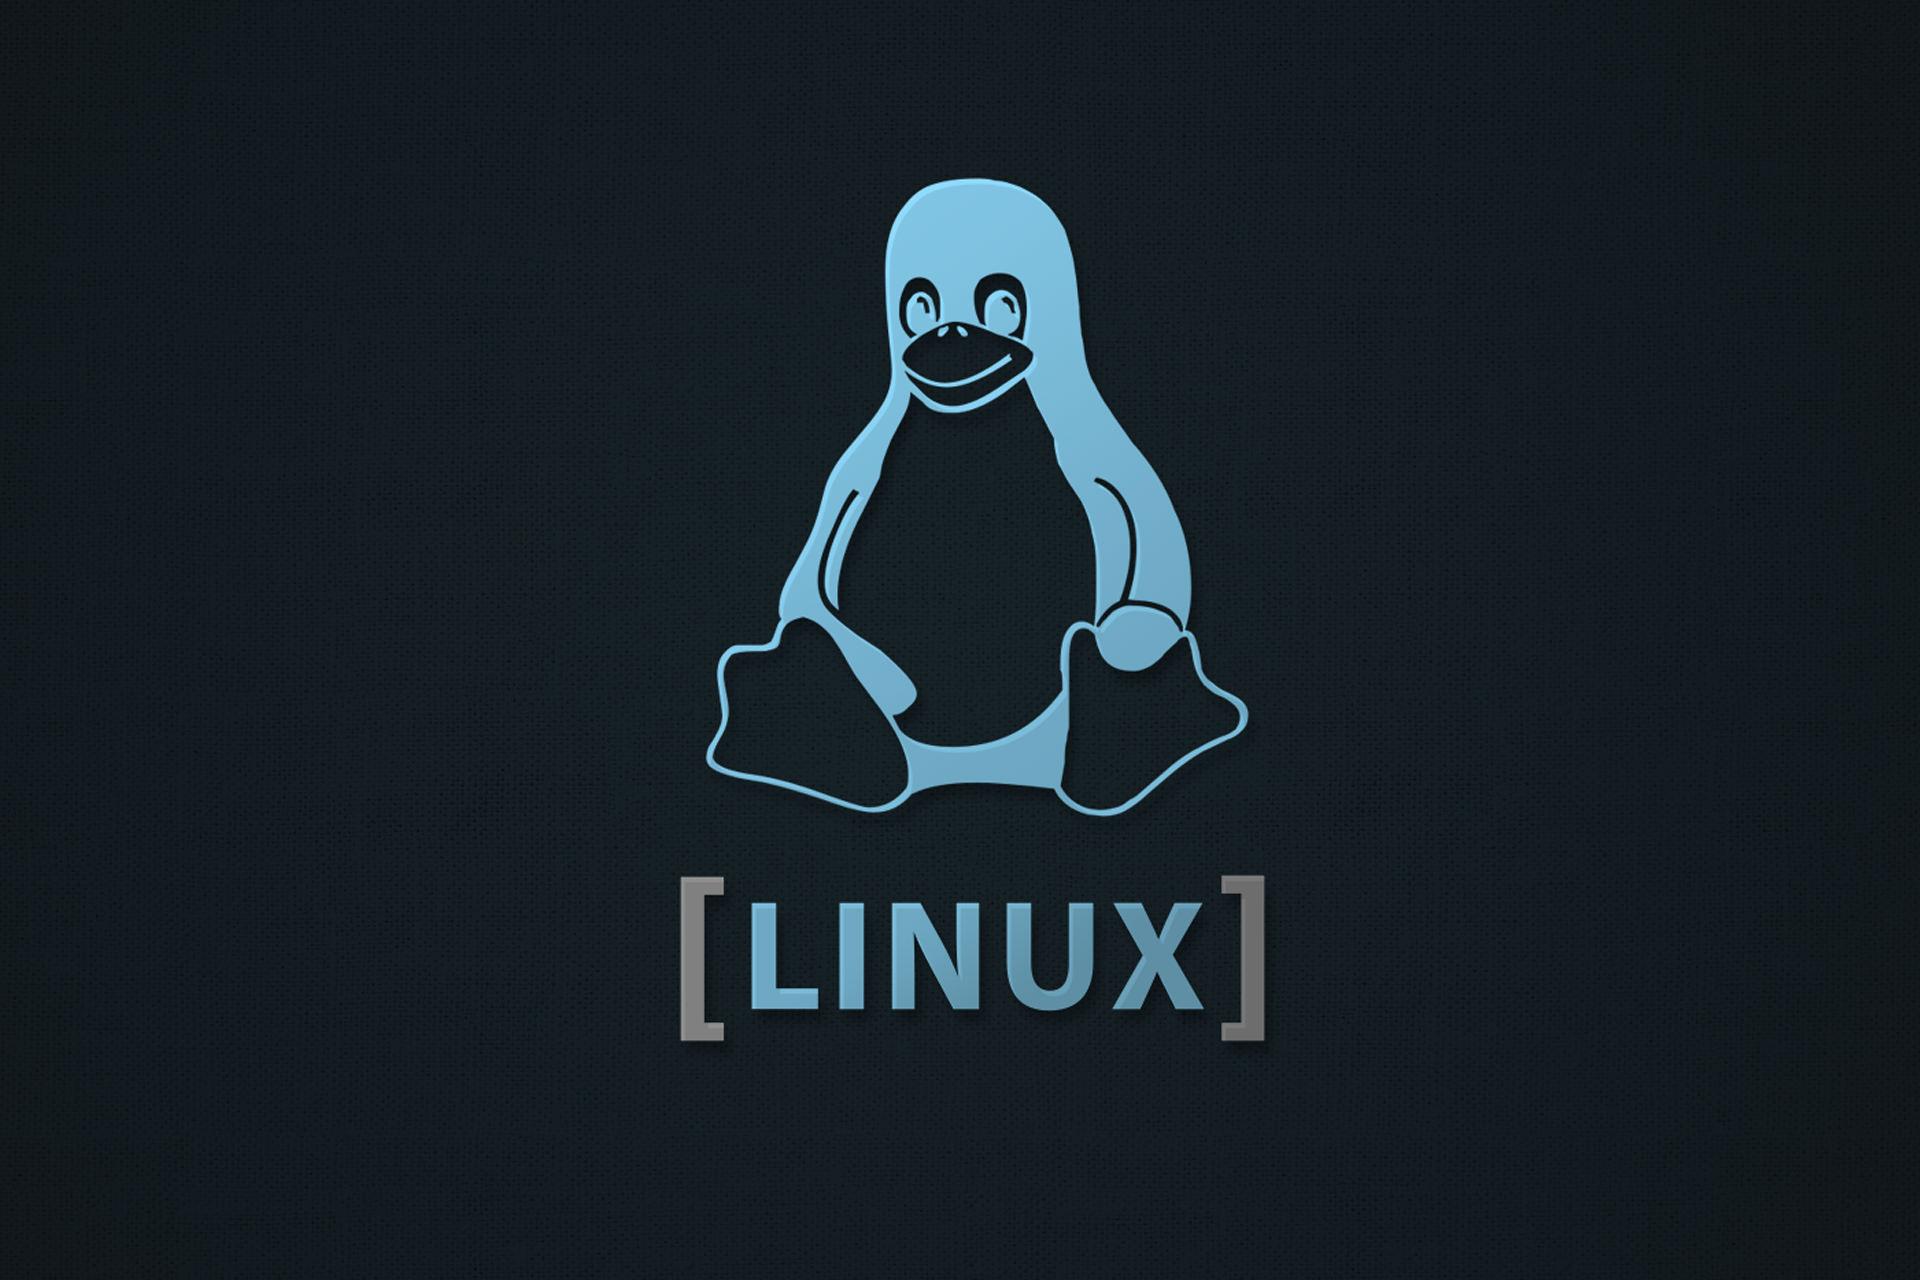 مرجع متخصصين ايران طرح گرافيكي تاكس / Tux مسكات لينوكس / Linux